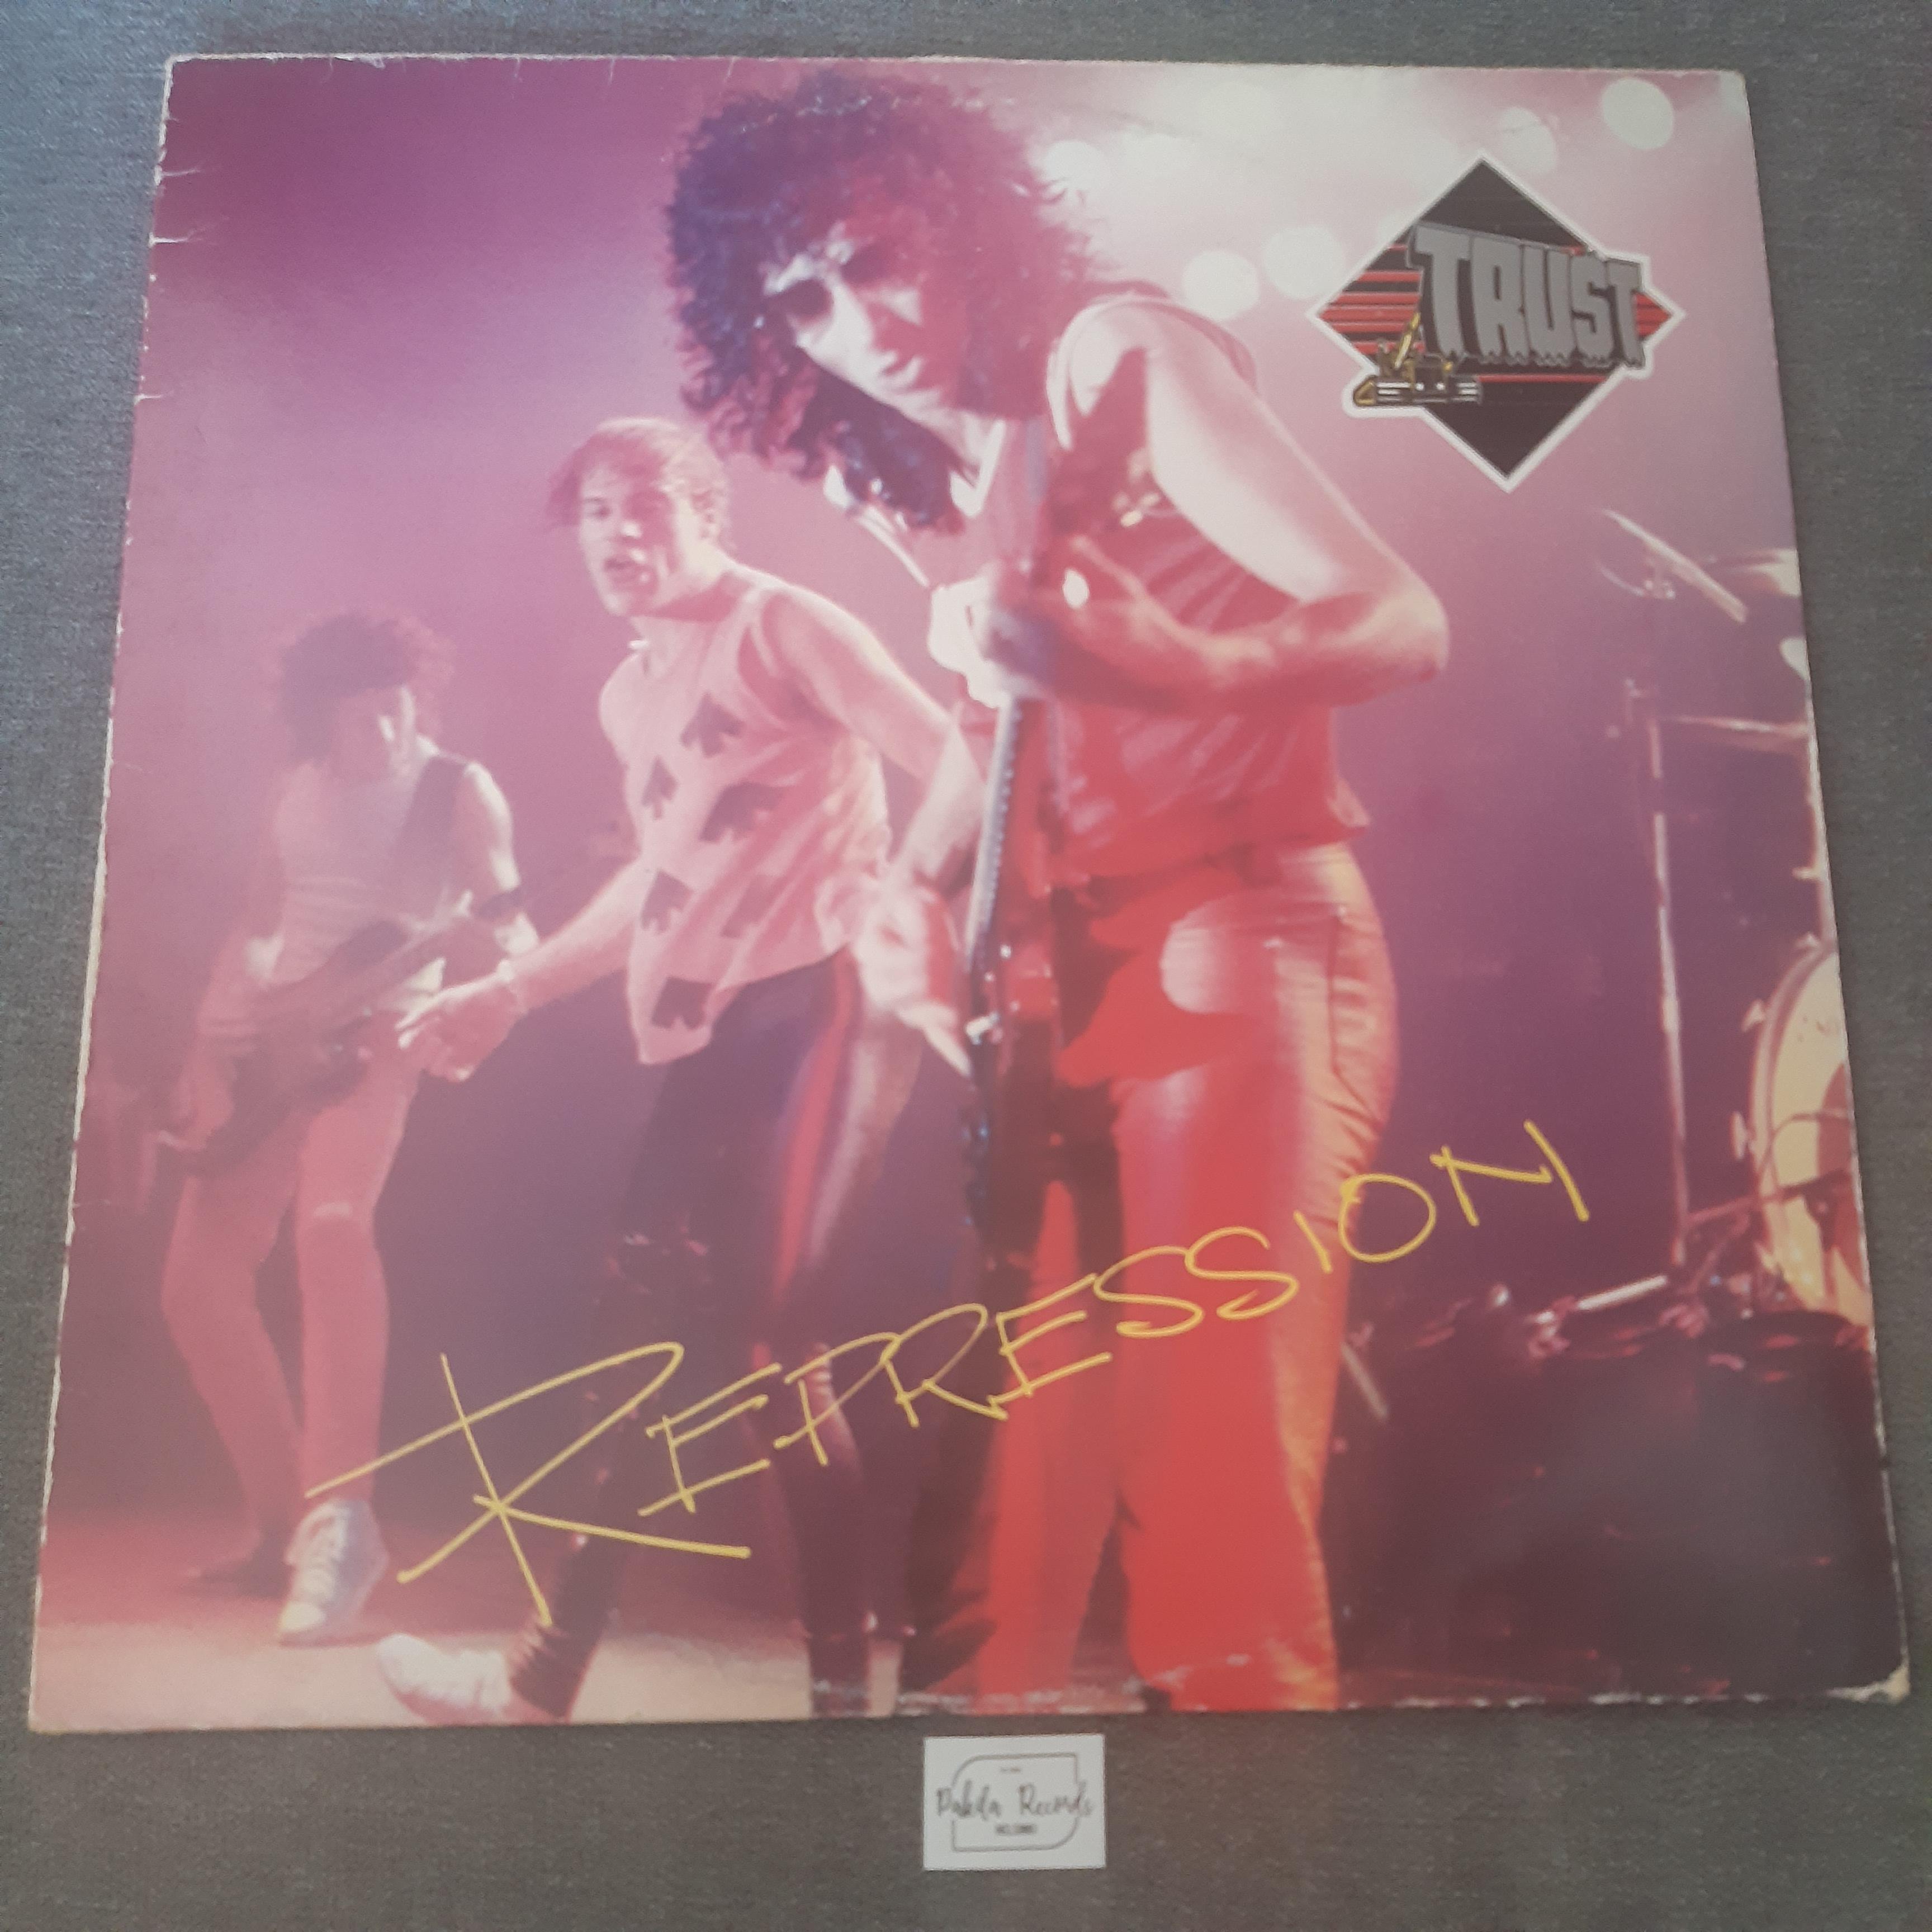 Trust - Repression - LP (käytetty)